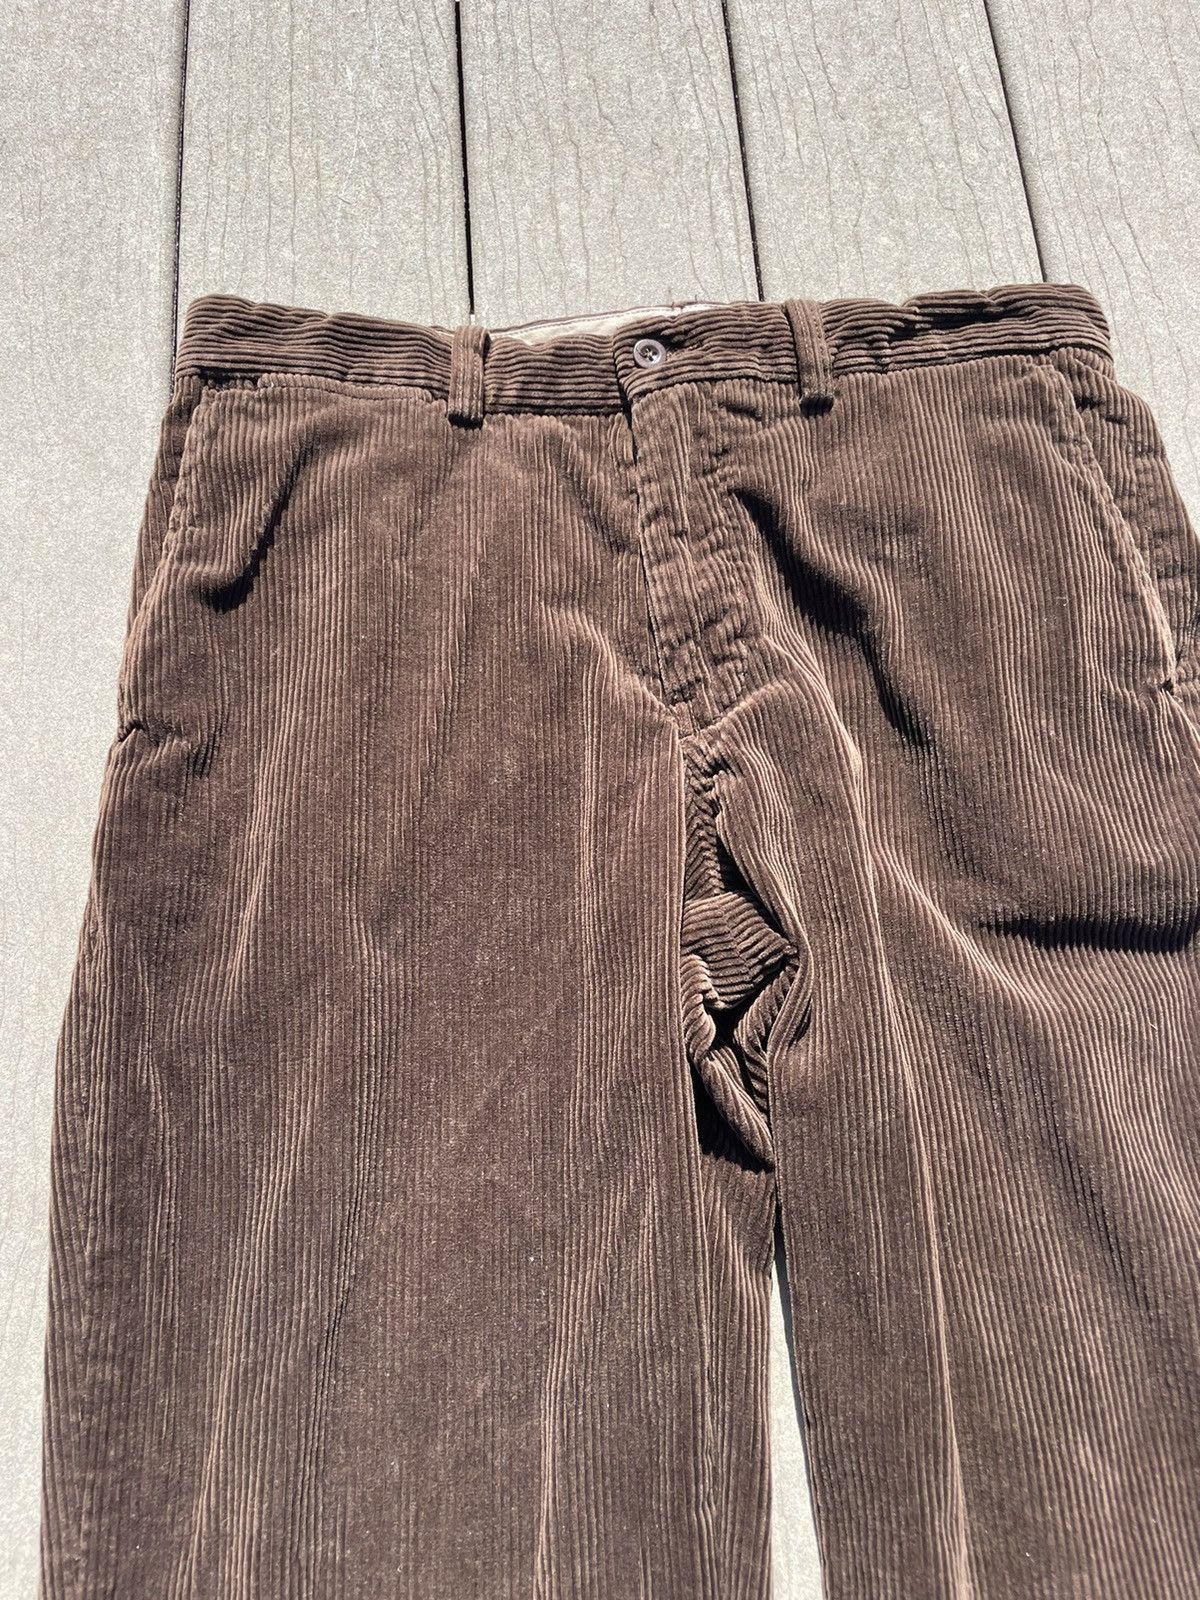 Vintage Dark Brown Corduroy Pants Size US 33 - 3 Thumbnail